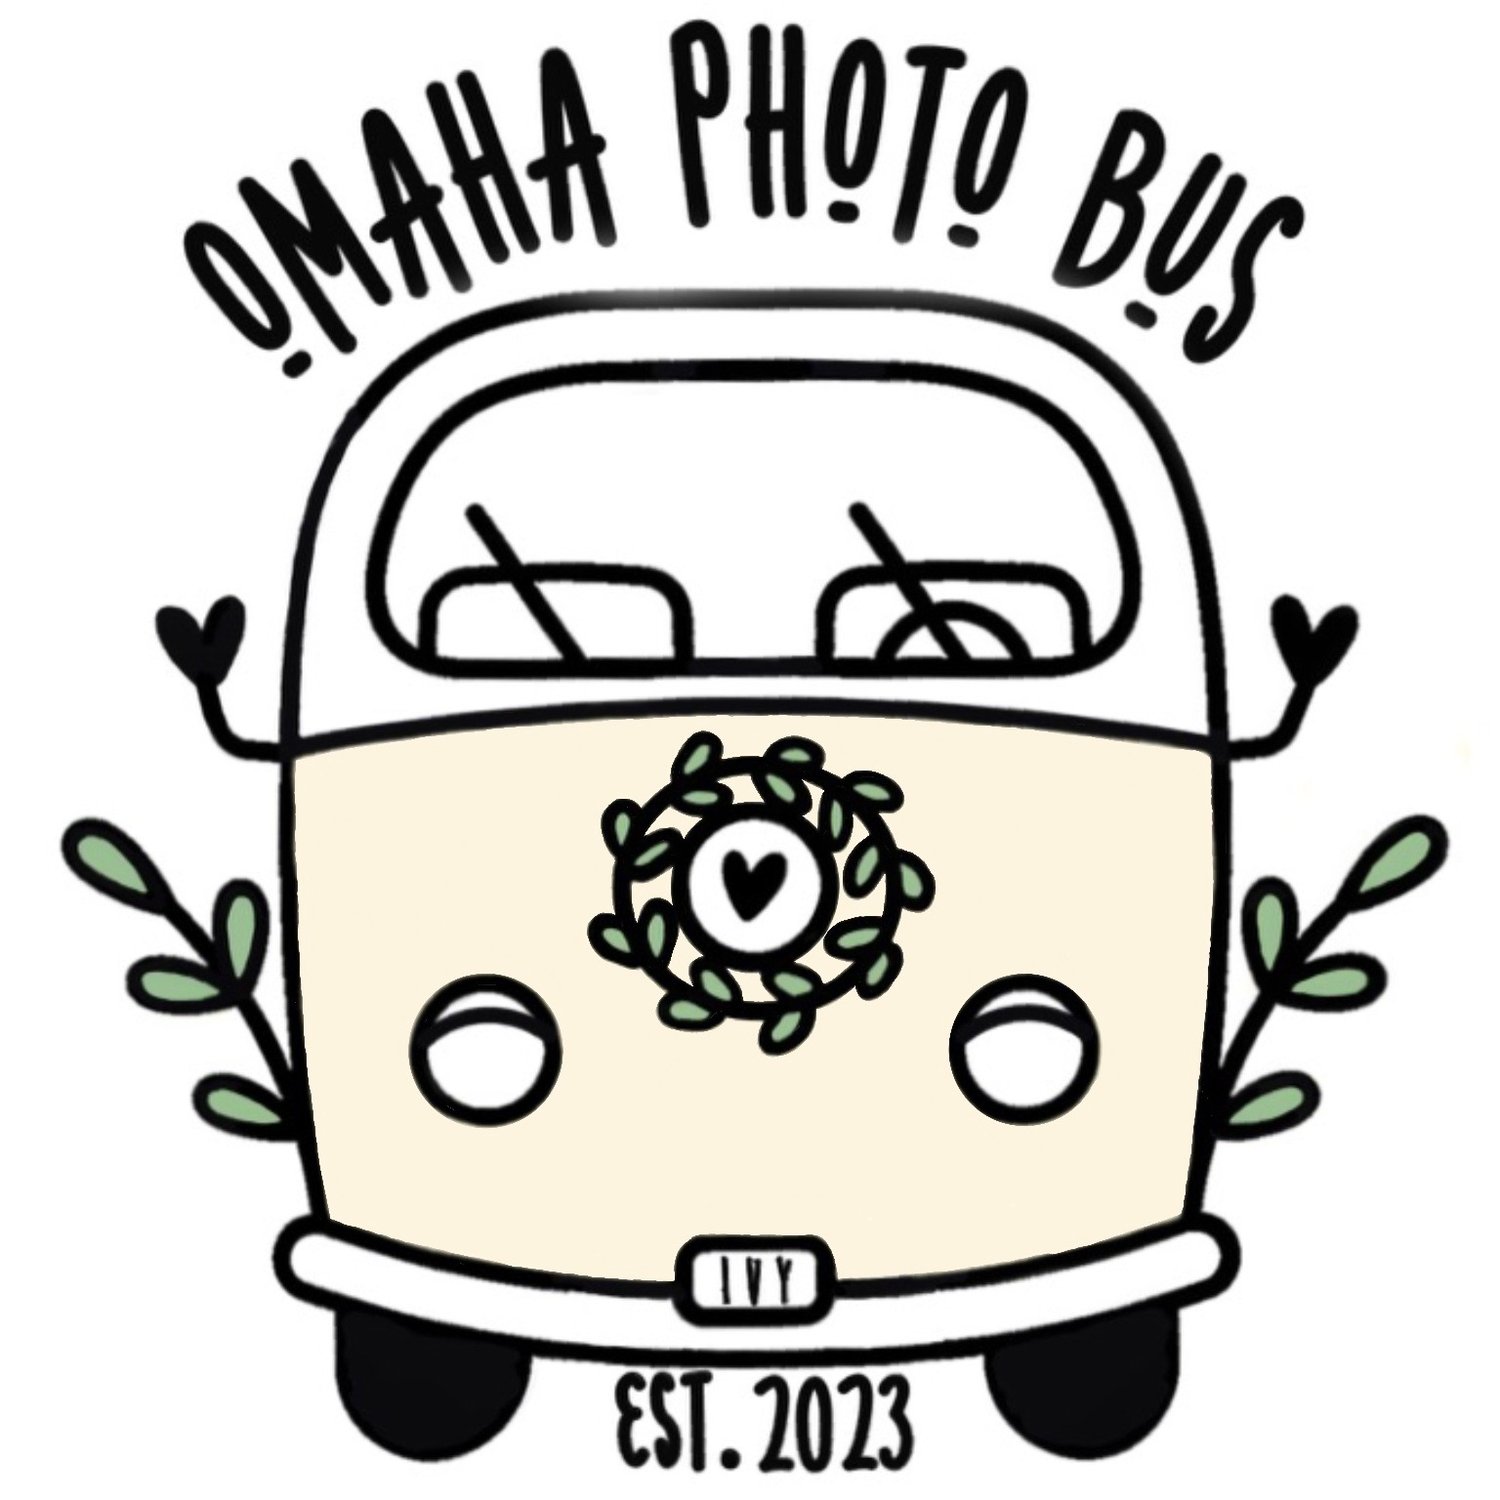 Omaha Photo Bus